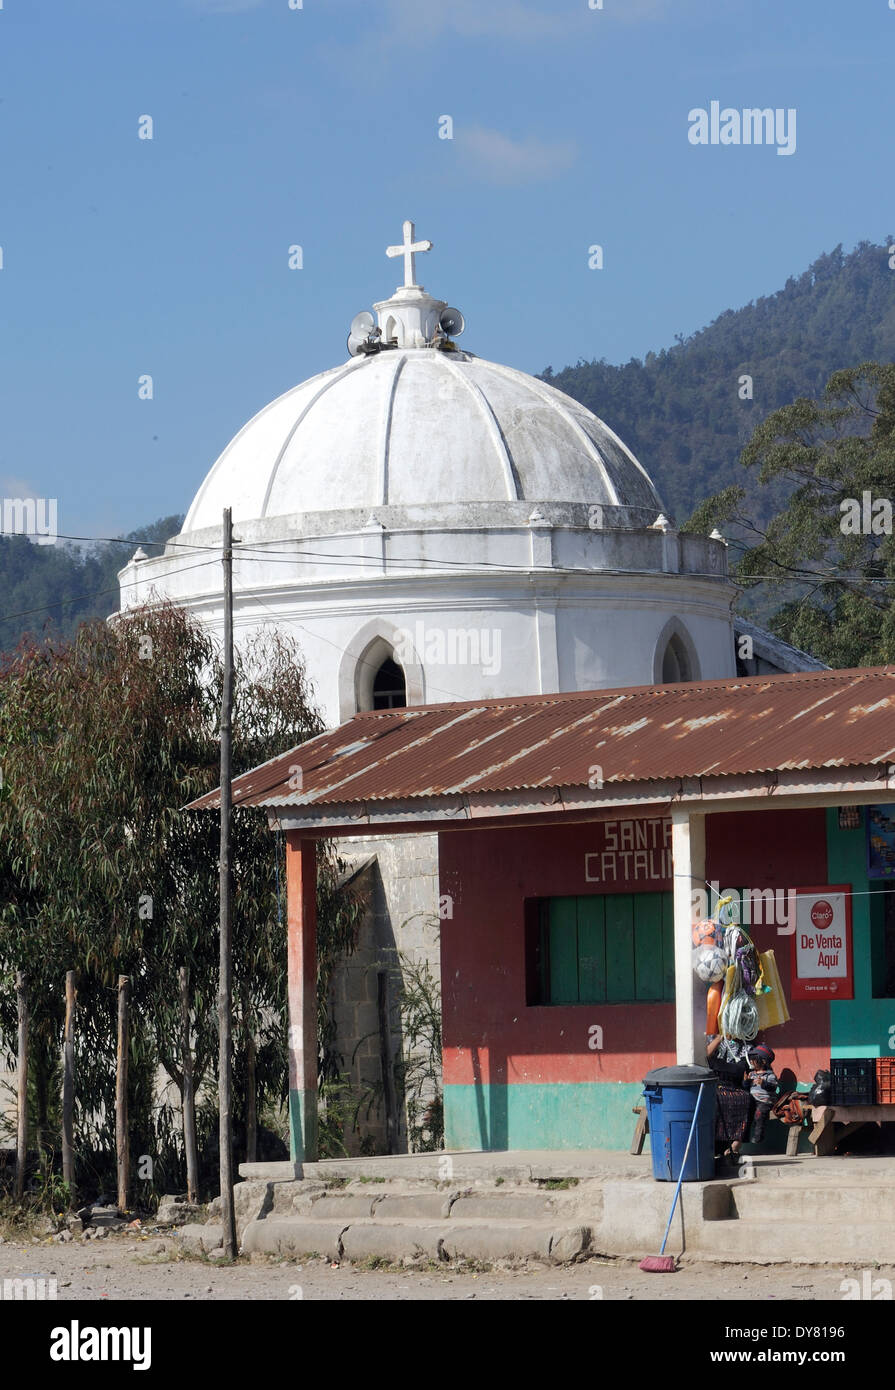 The dome of the church in Santa Catarina.  Santa Catarina Ixtahuacan, Departamente de Sololá, Republic of Guatemala. Stock Photo